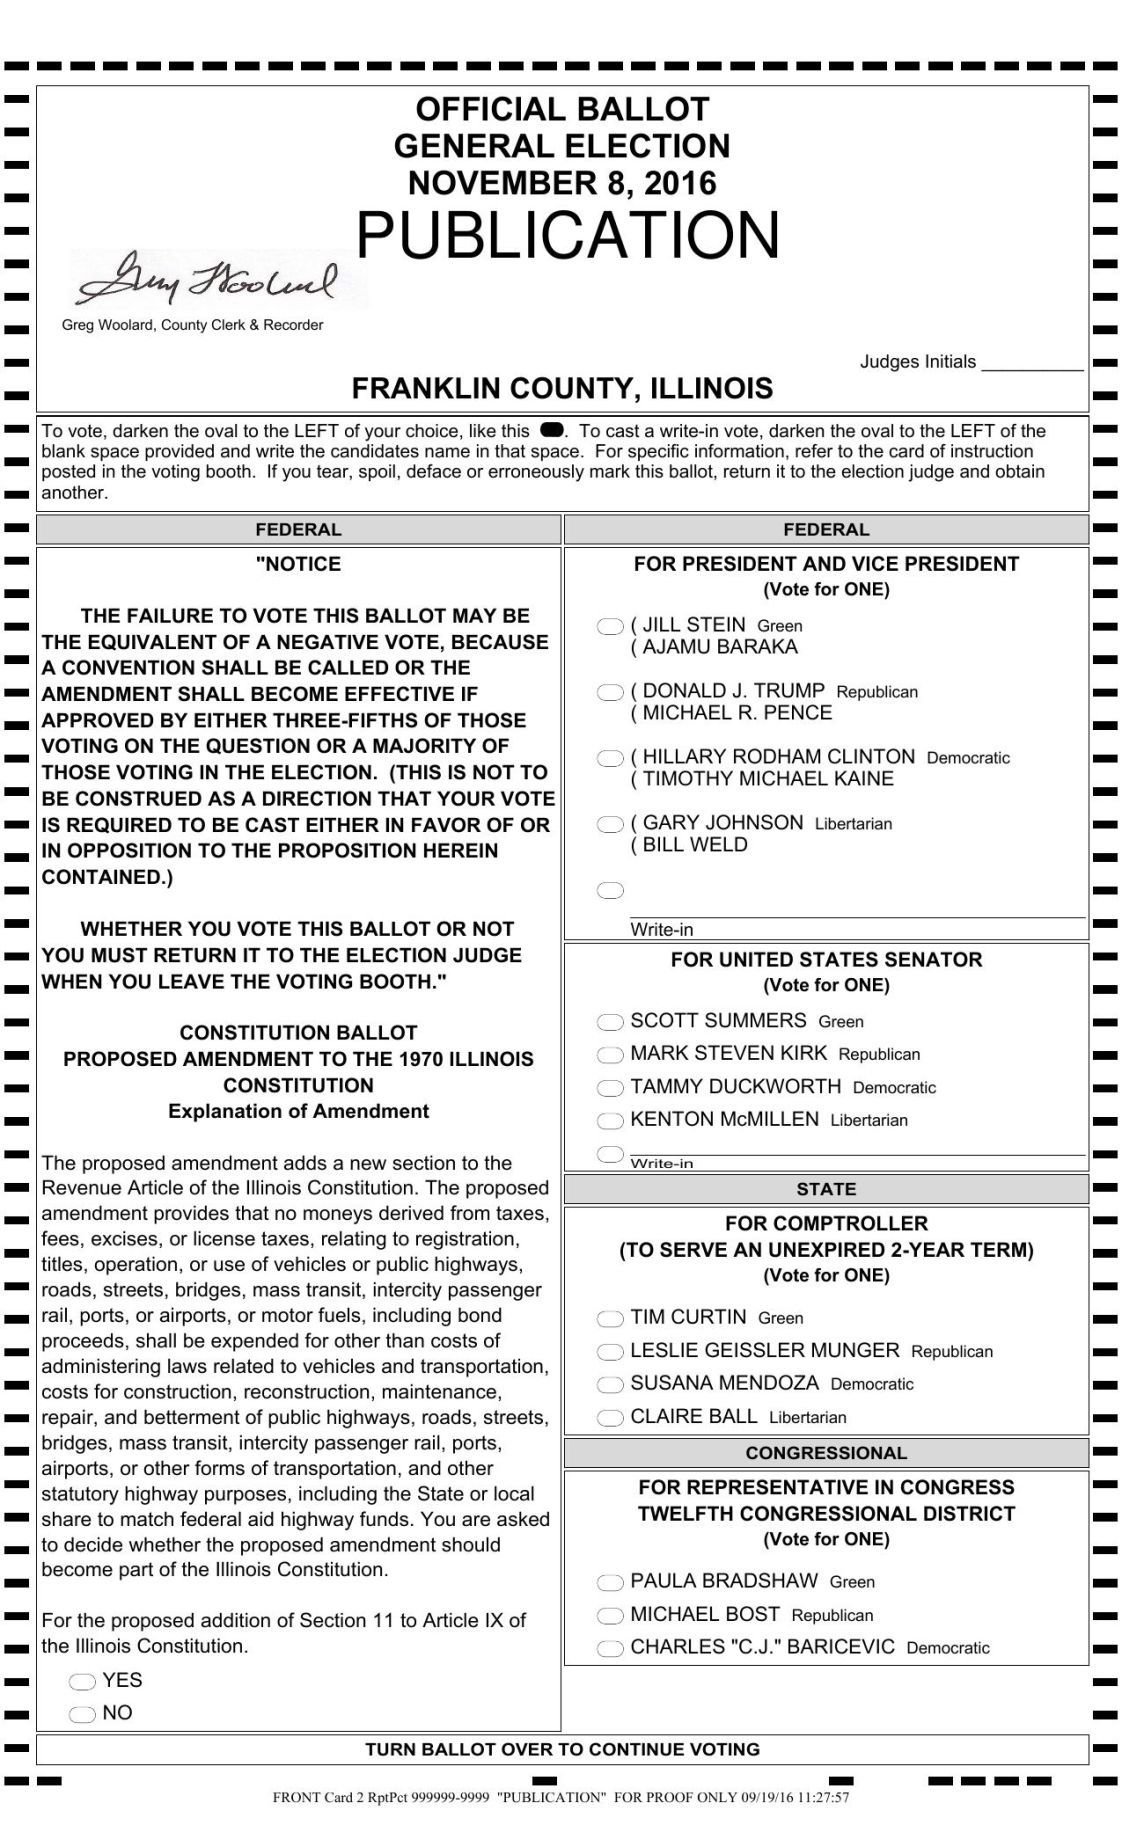 Franklin County sample ballot